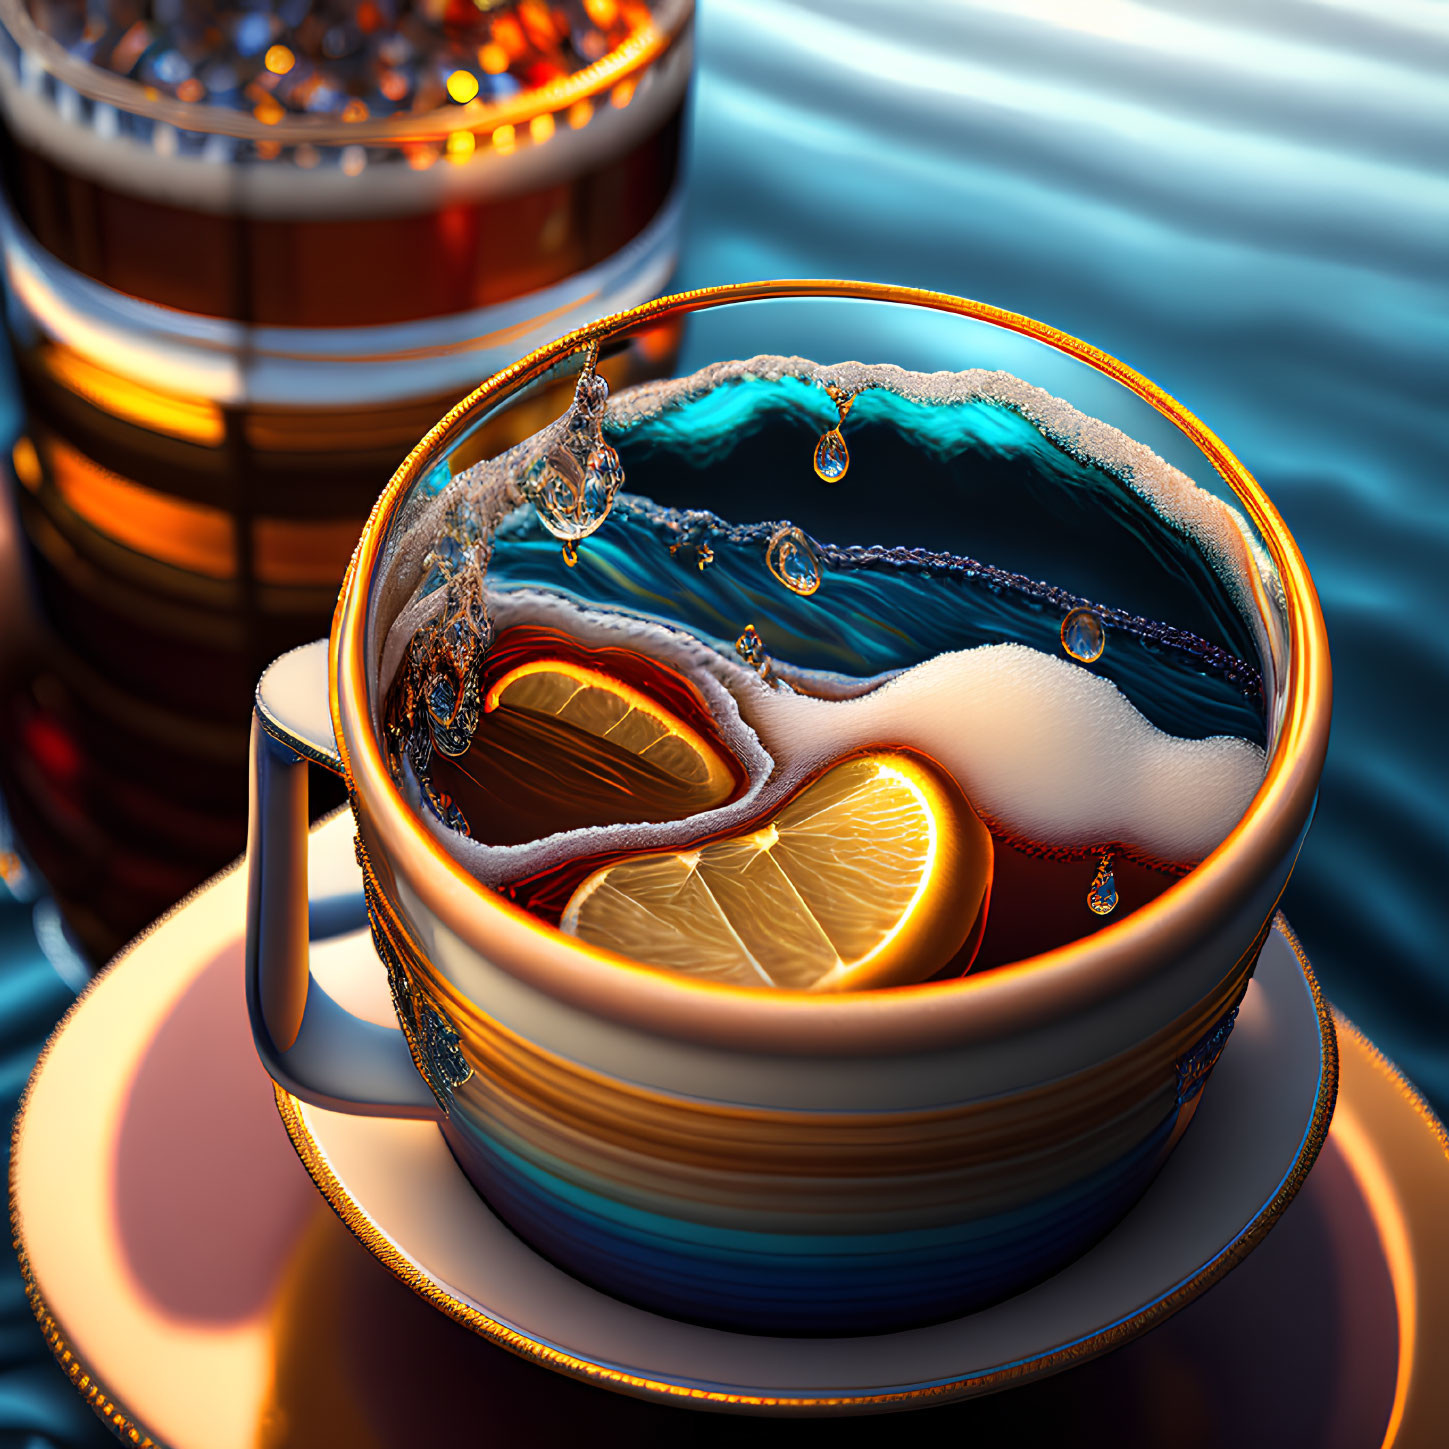 Colorful Ceramic Cup with Tea Bag, Lemon Slice, and Splash on Saucer